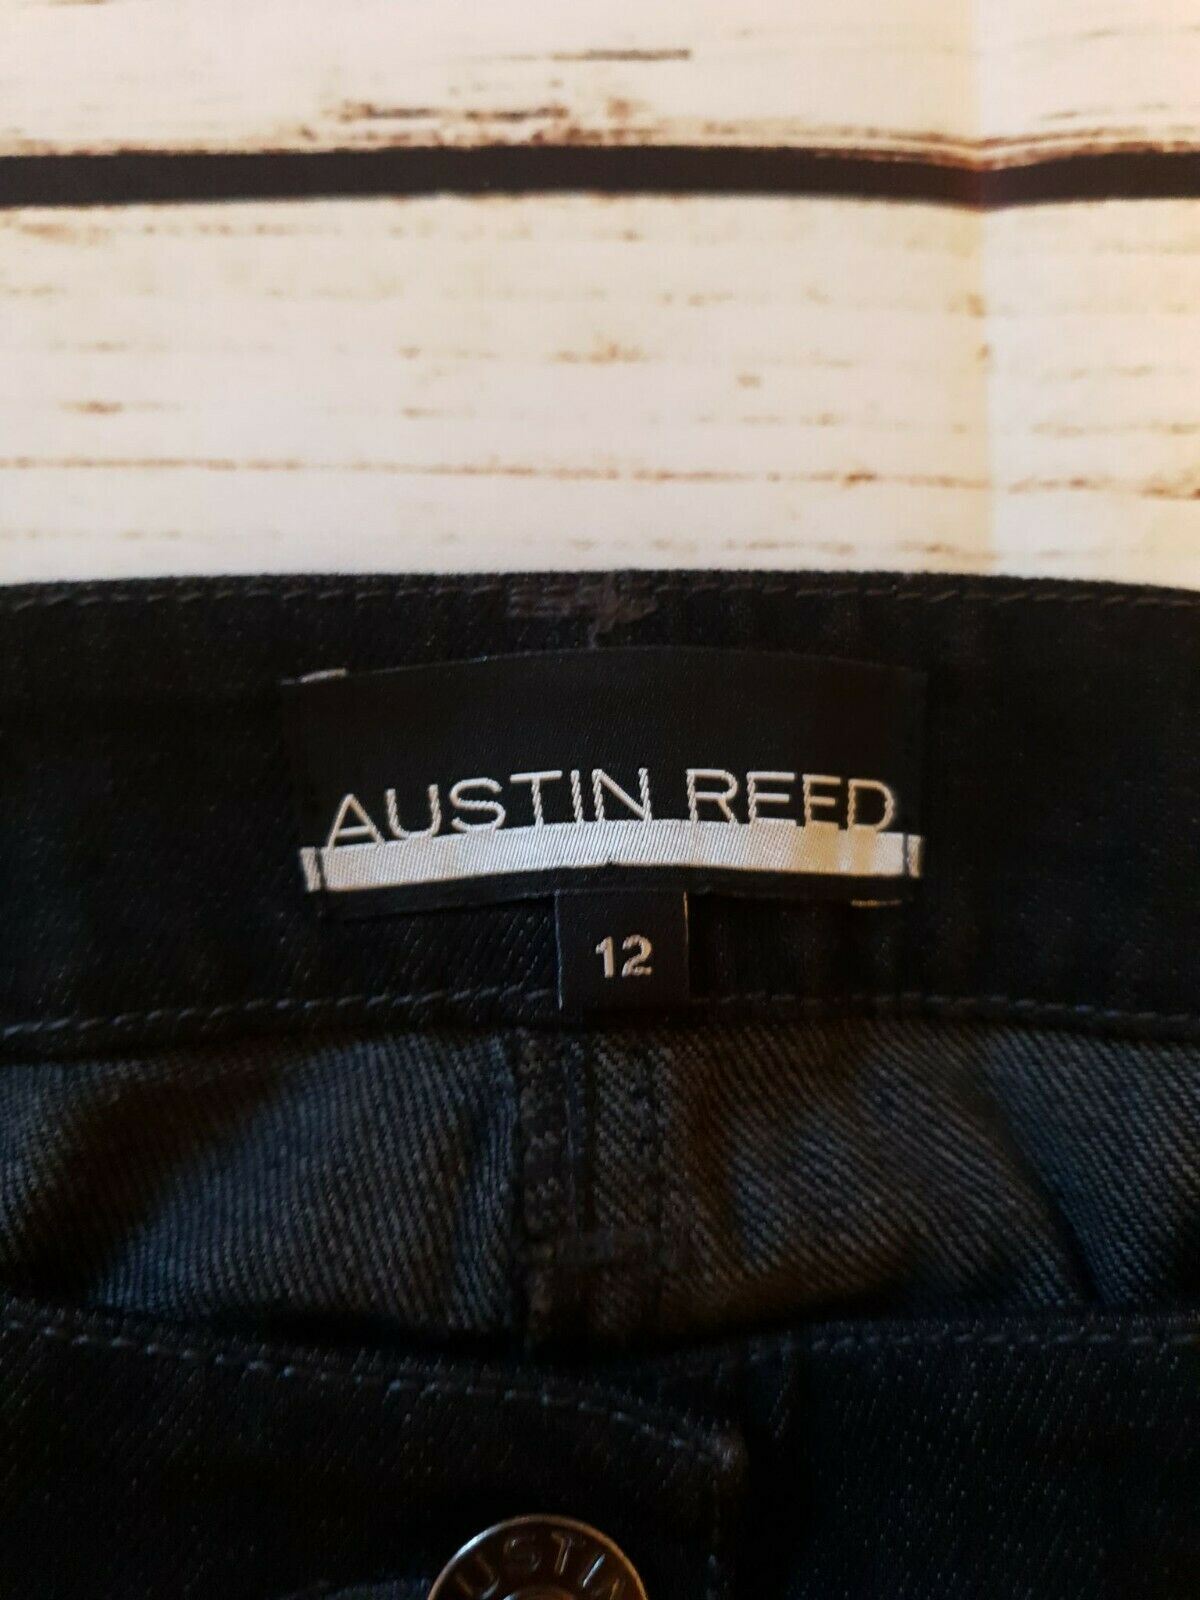 Austin Reed Women's Black Bootcut Jeans UK 12 US 8 EU 40 RRP £60 Timeless Fashions